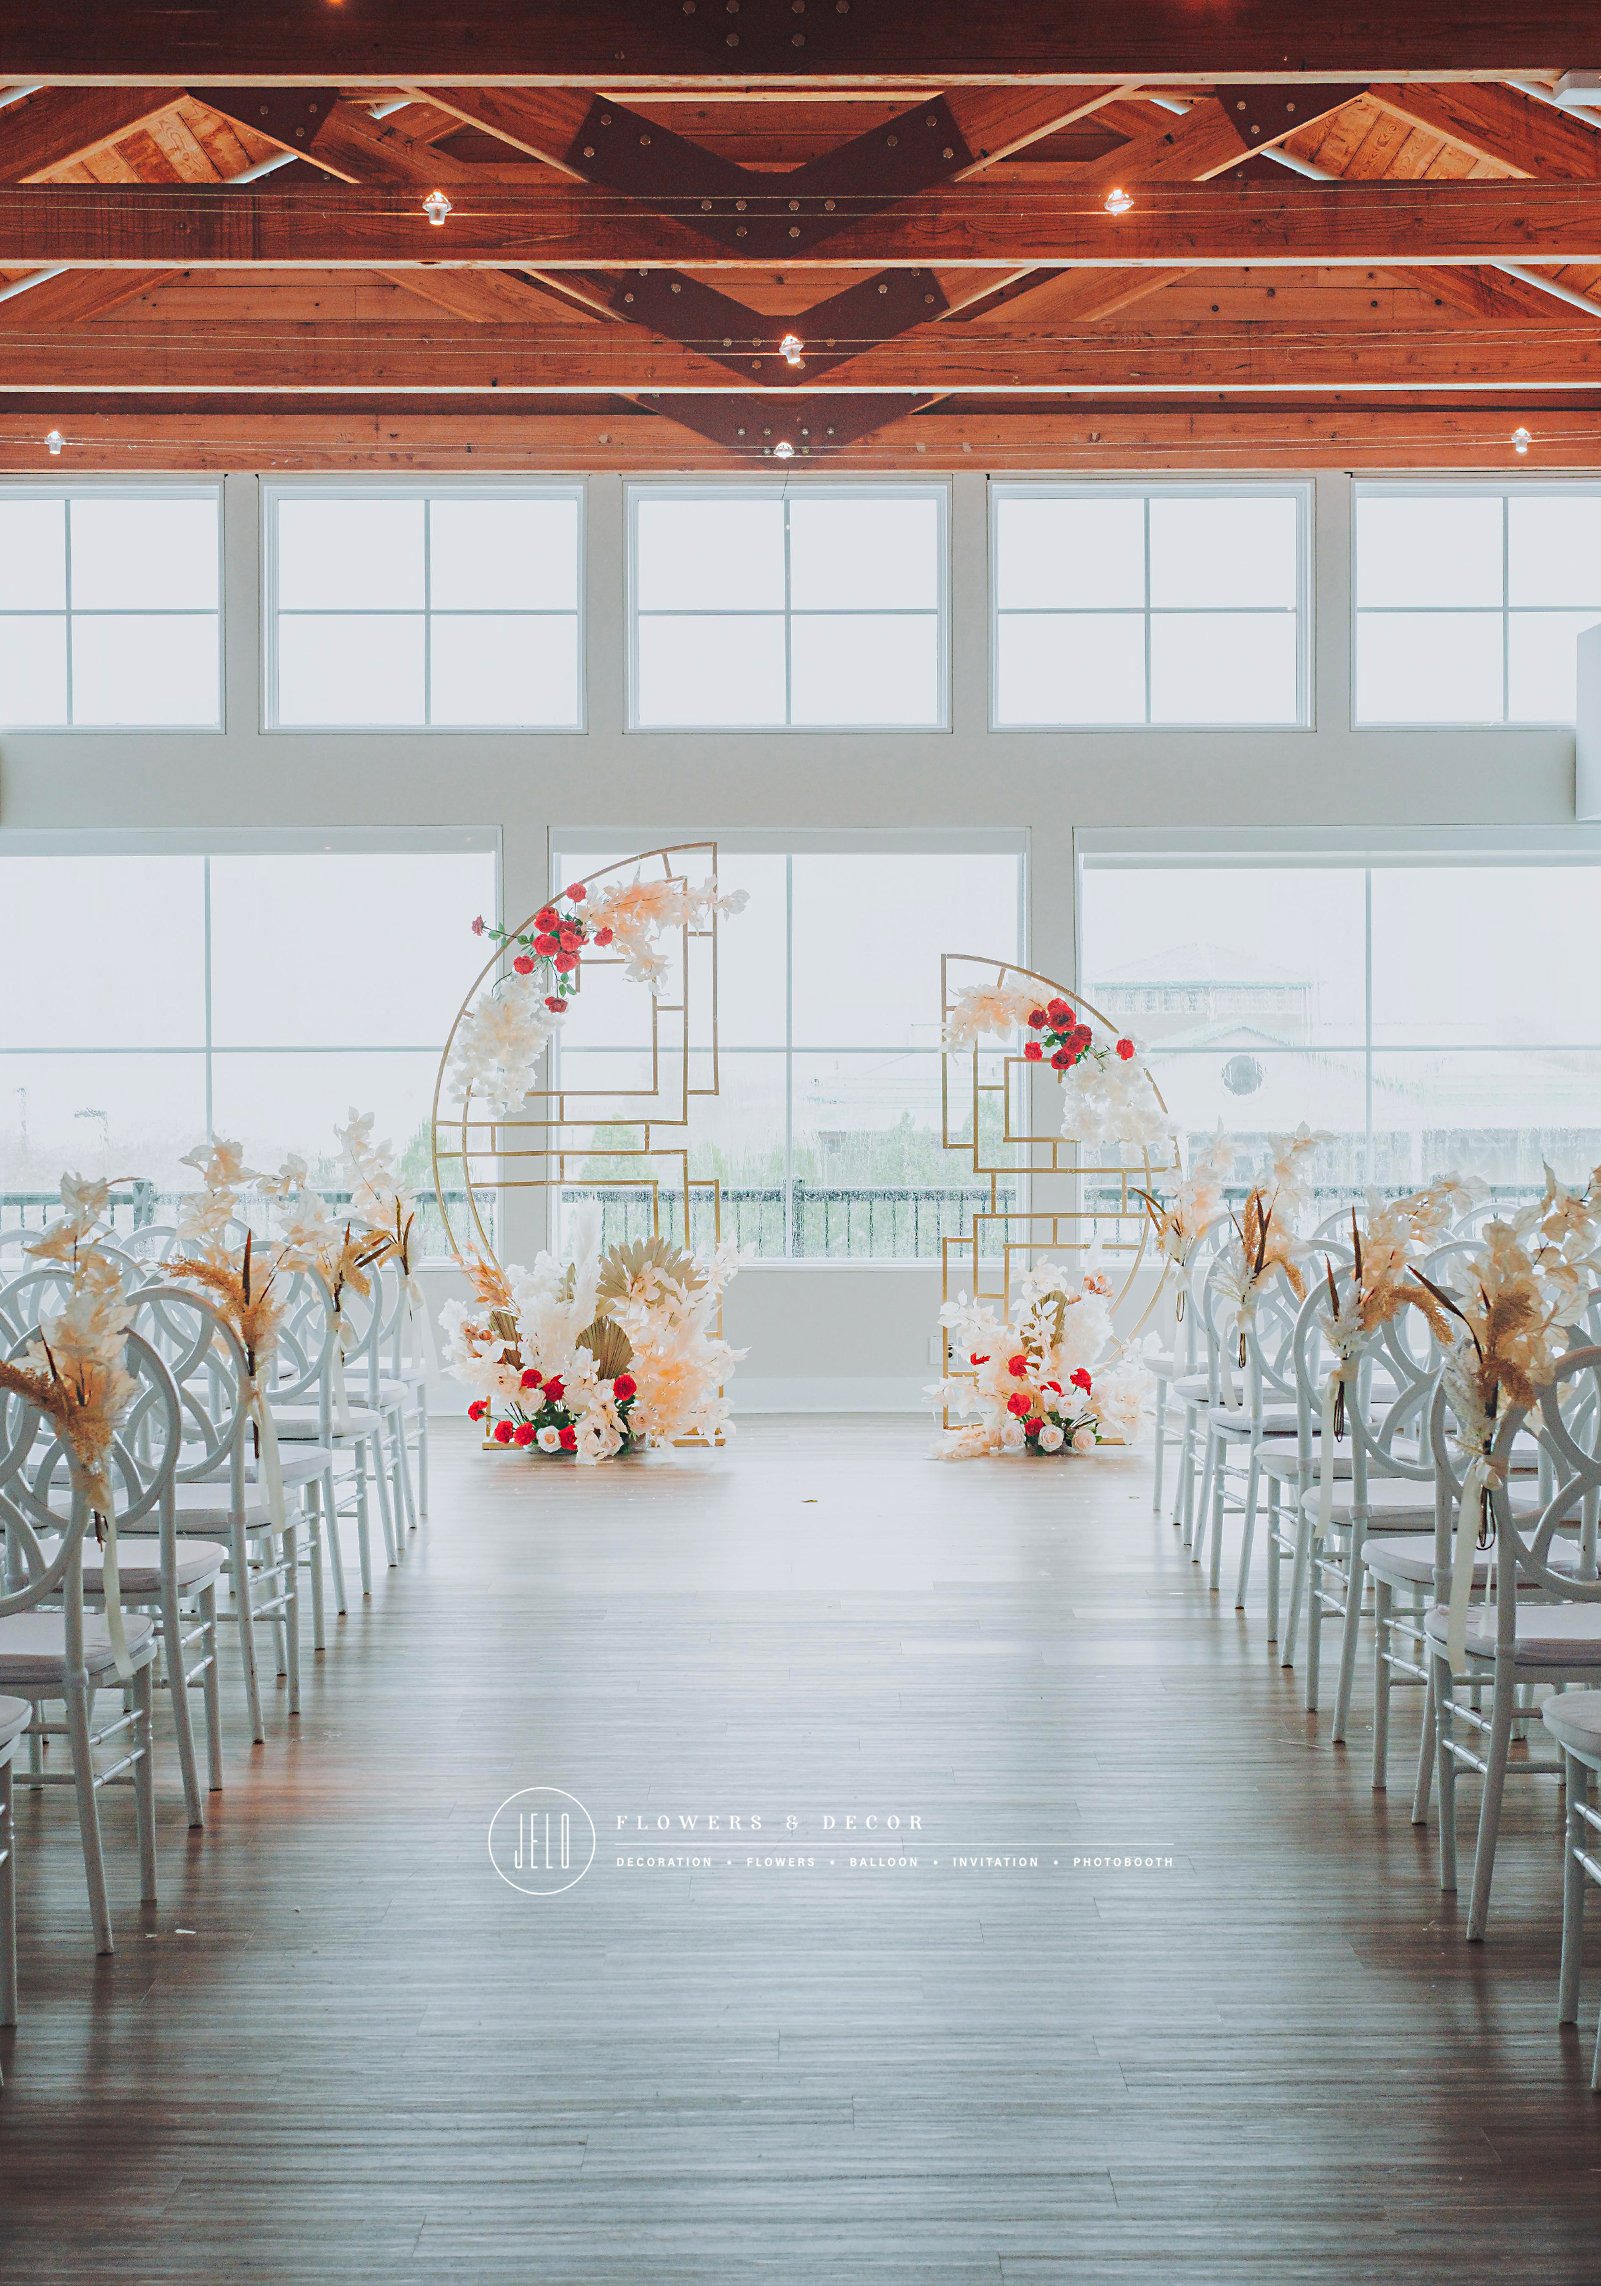 Sharon + Kellan's Modern Chinese Themed Wedding at Maritime Parc New Jersey  — Jelo Flowers & Decor